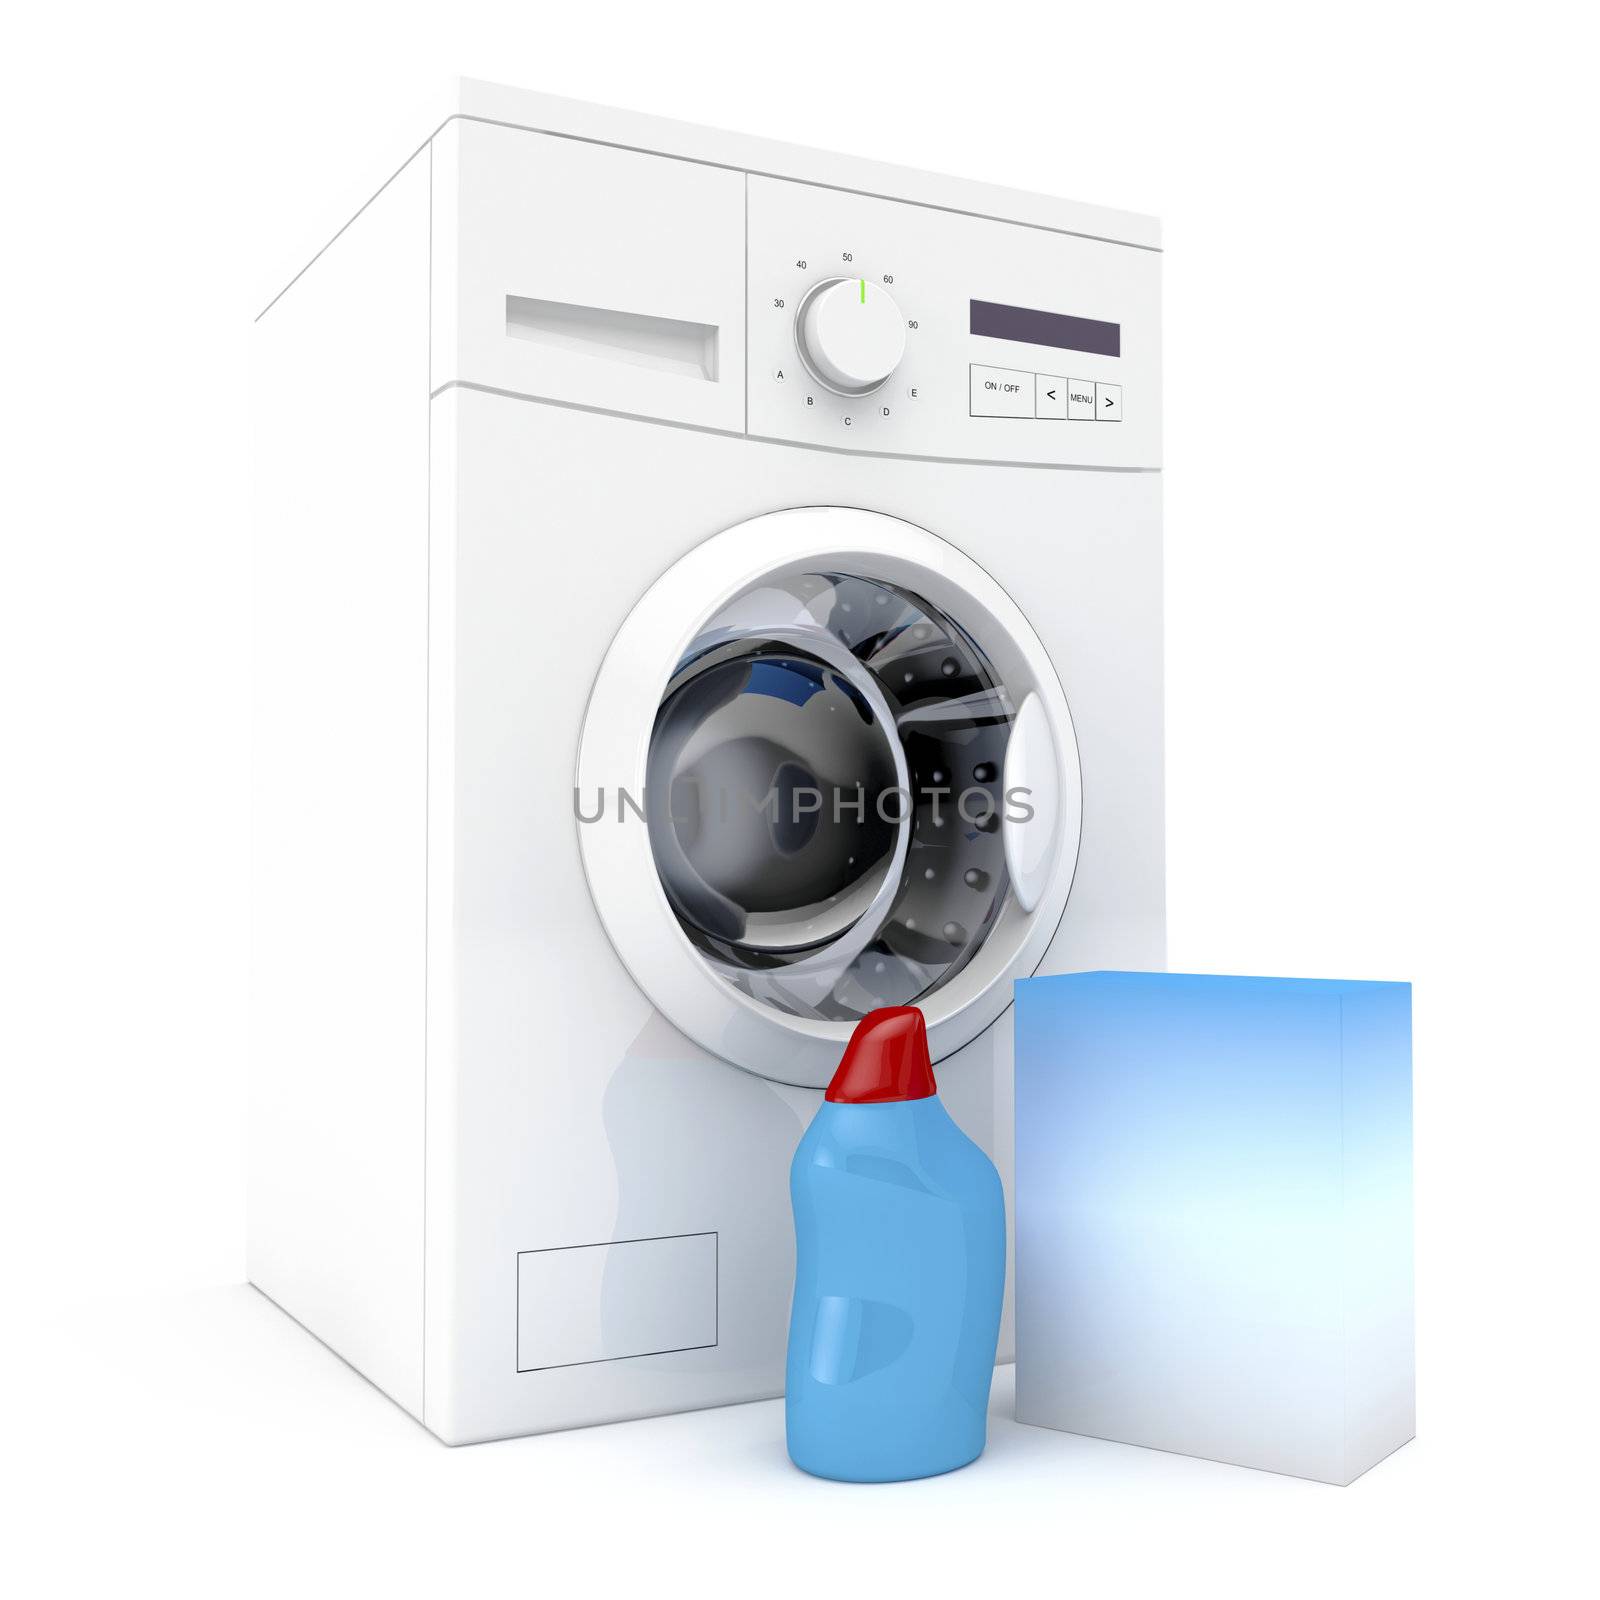 Washing machine by magraphics